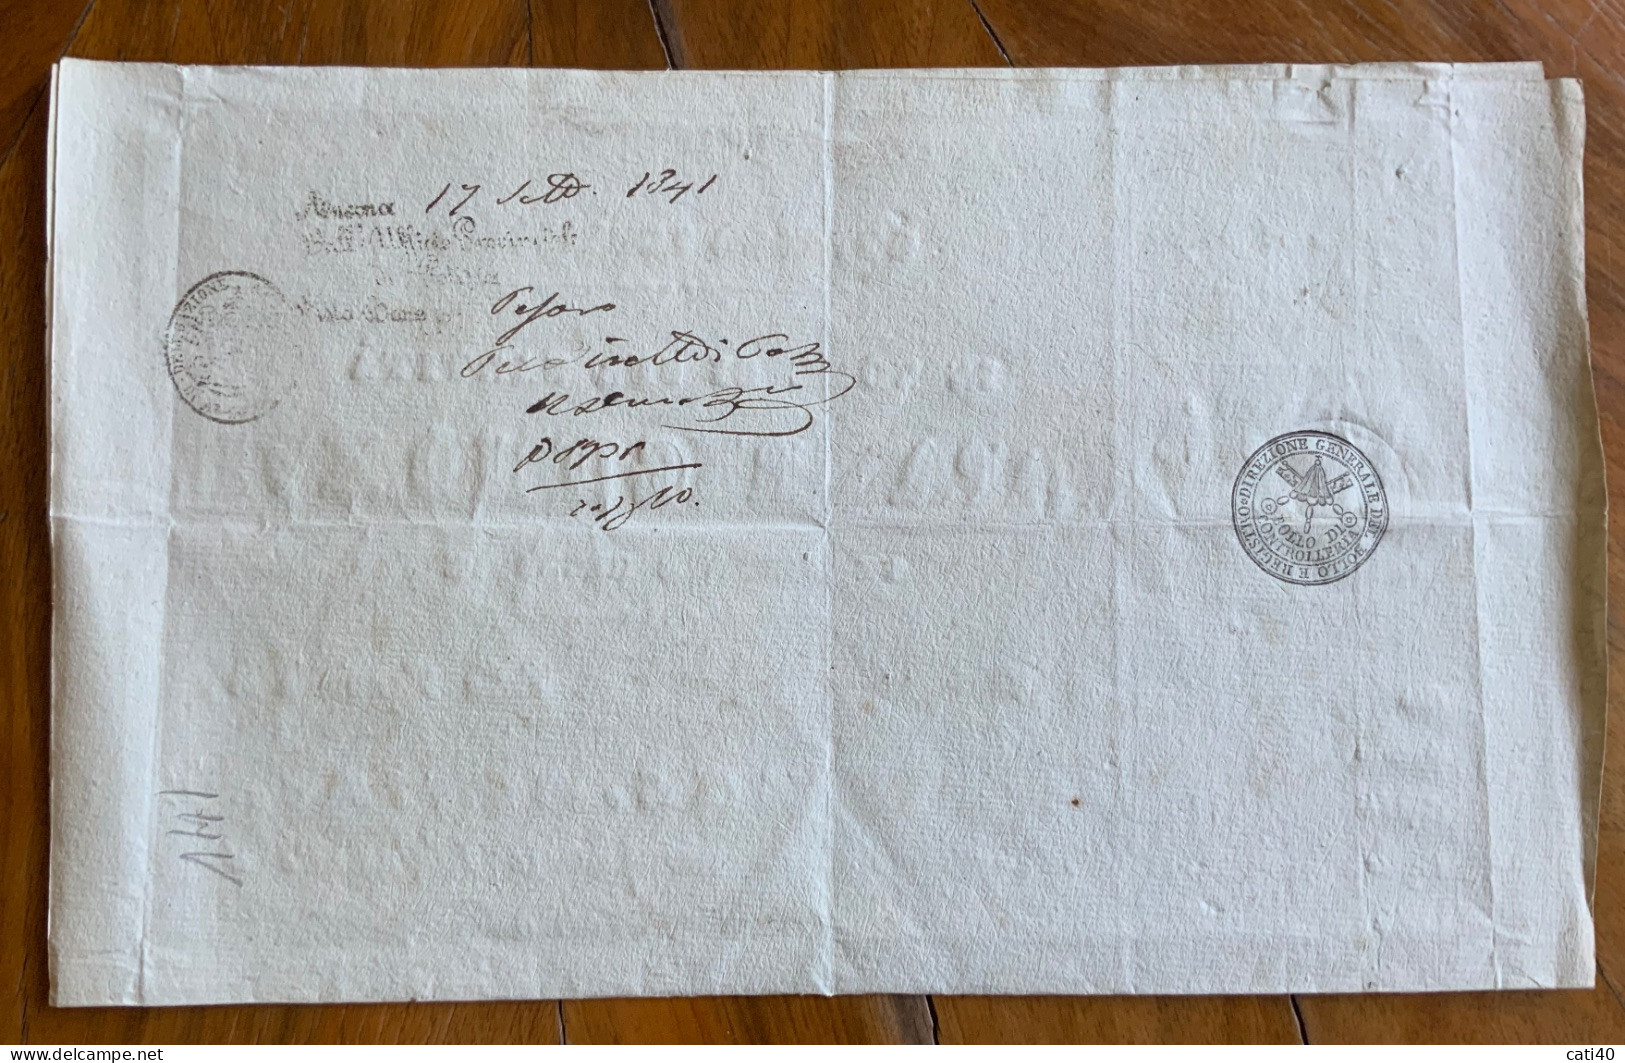 PASSAPORTO ALL'INTERNO - GOVERNO PONTIFICIO PAPA GREGORIO XVI - FIRMA AUTOGRAFA CARD. RIARIO SFORZA - 11/9/1841 - ... - Historische Documenten